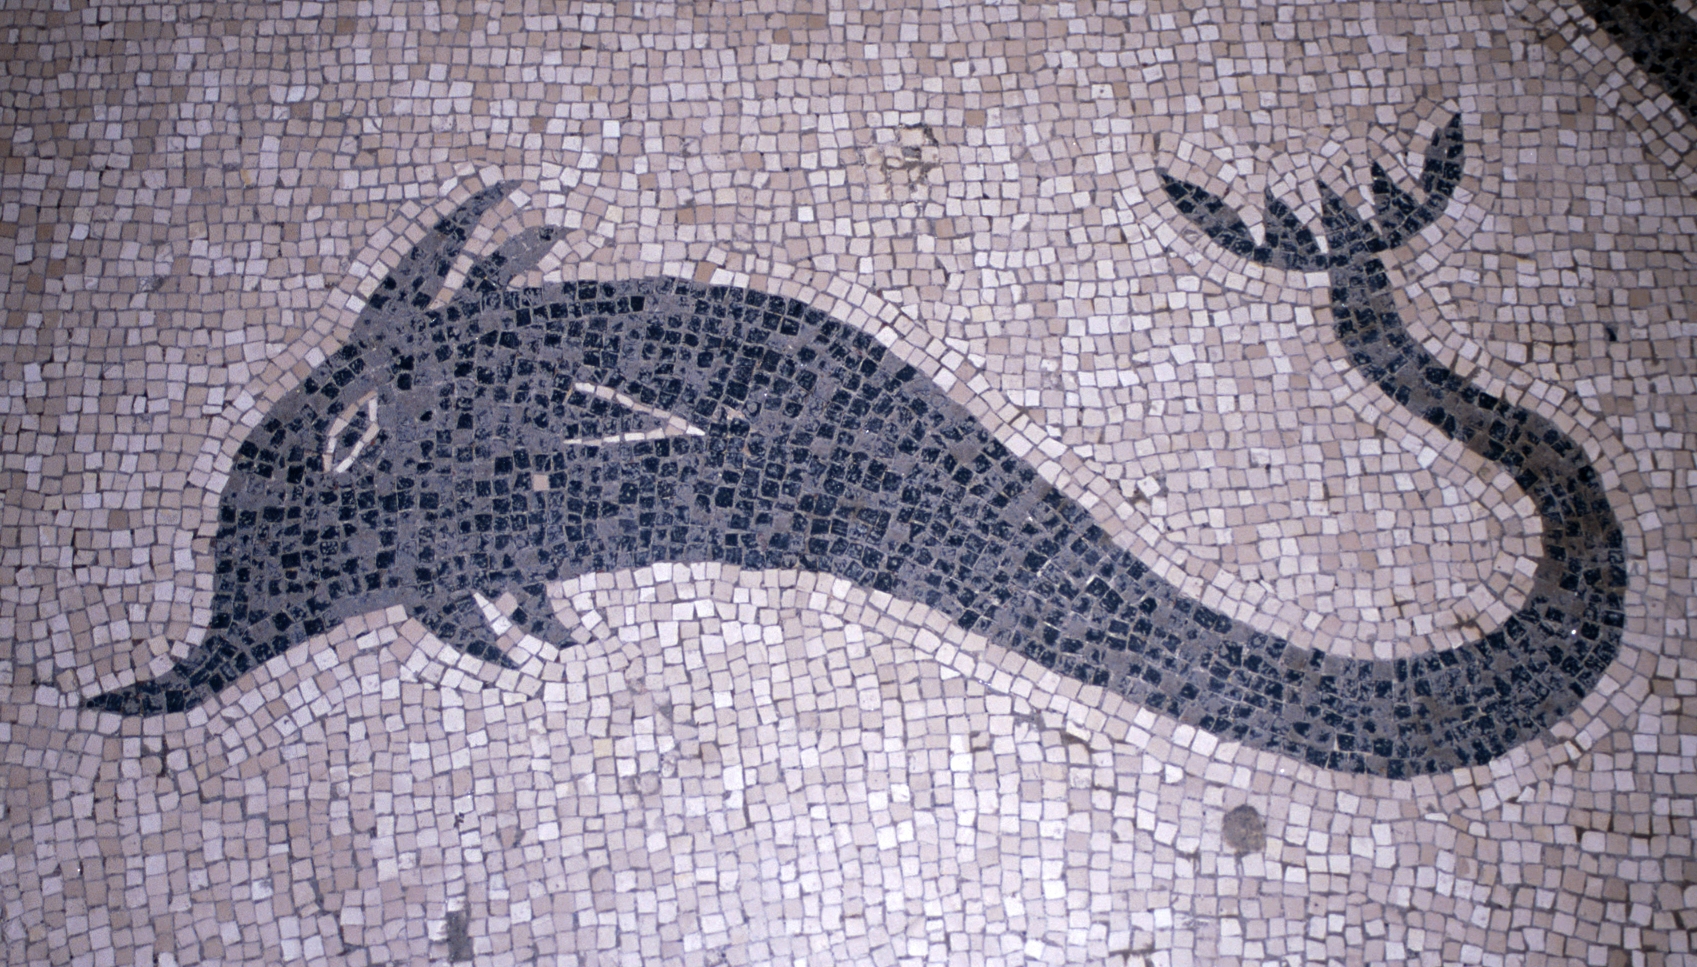 a mosaic showing an ornate lizard sitting on it's side